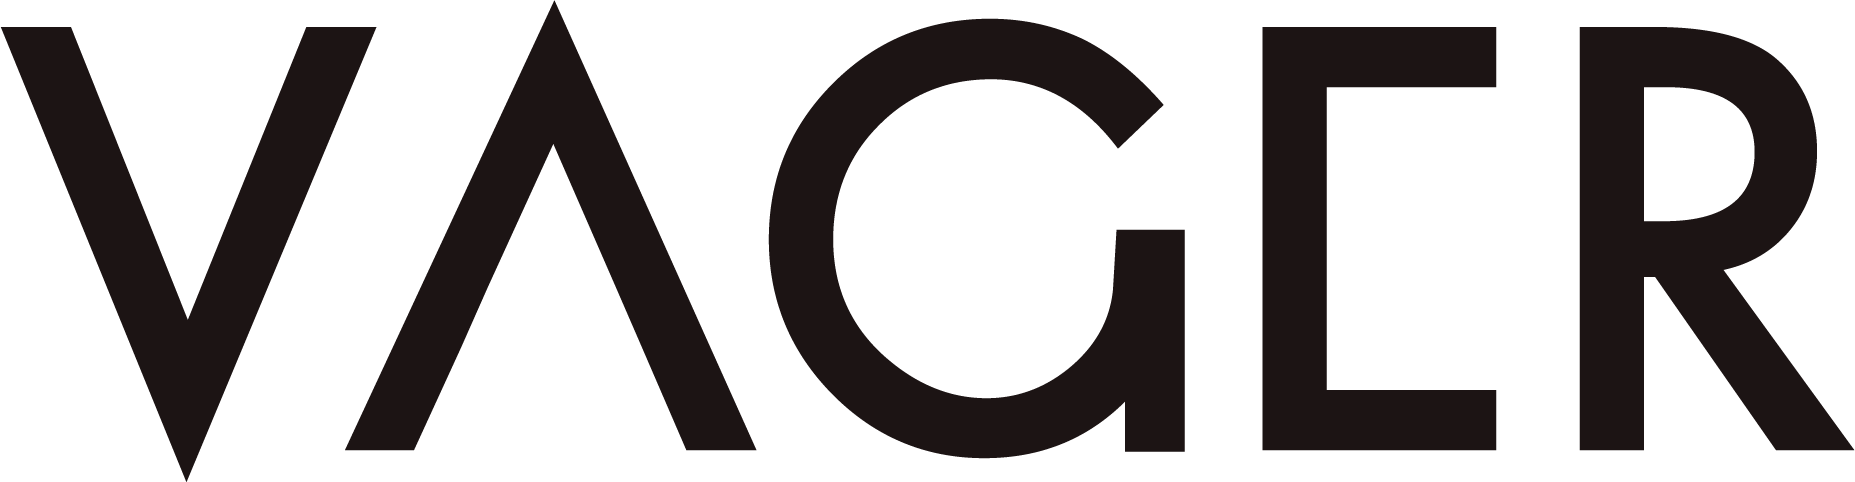 Vager logo